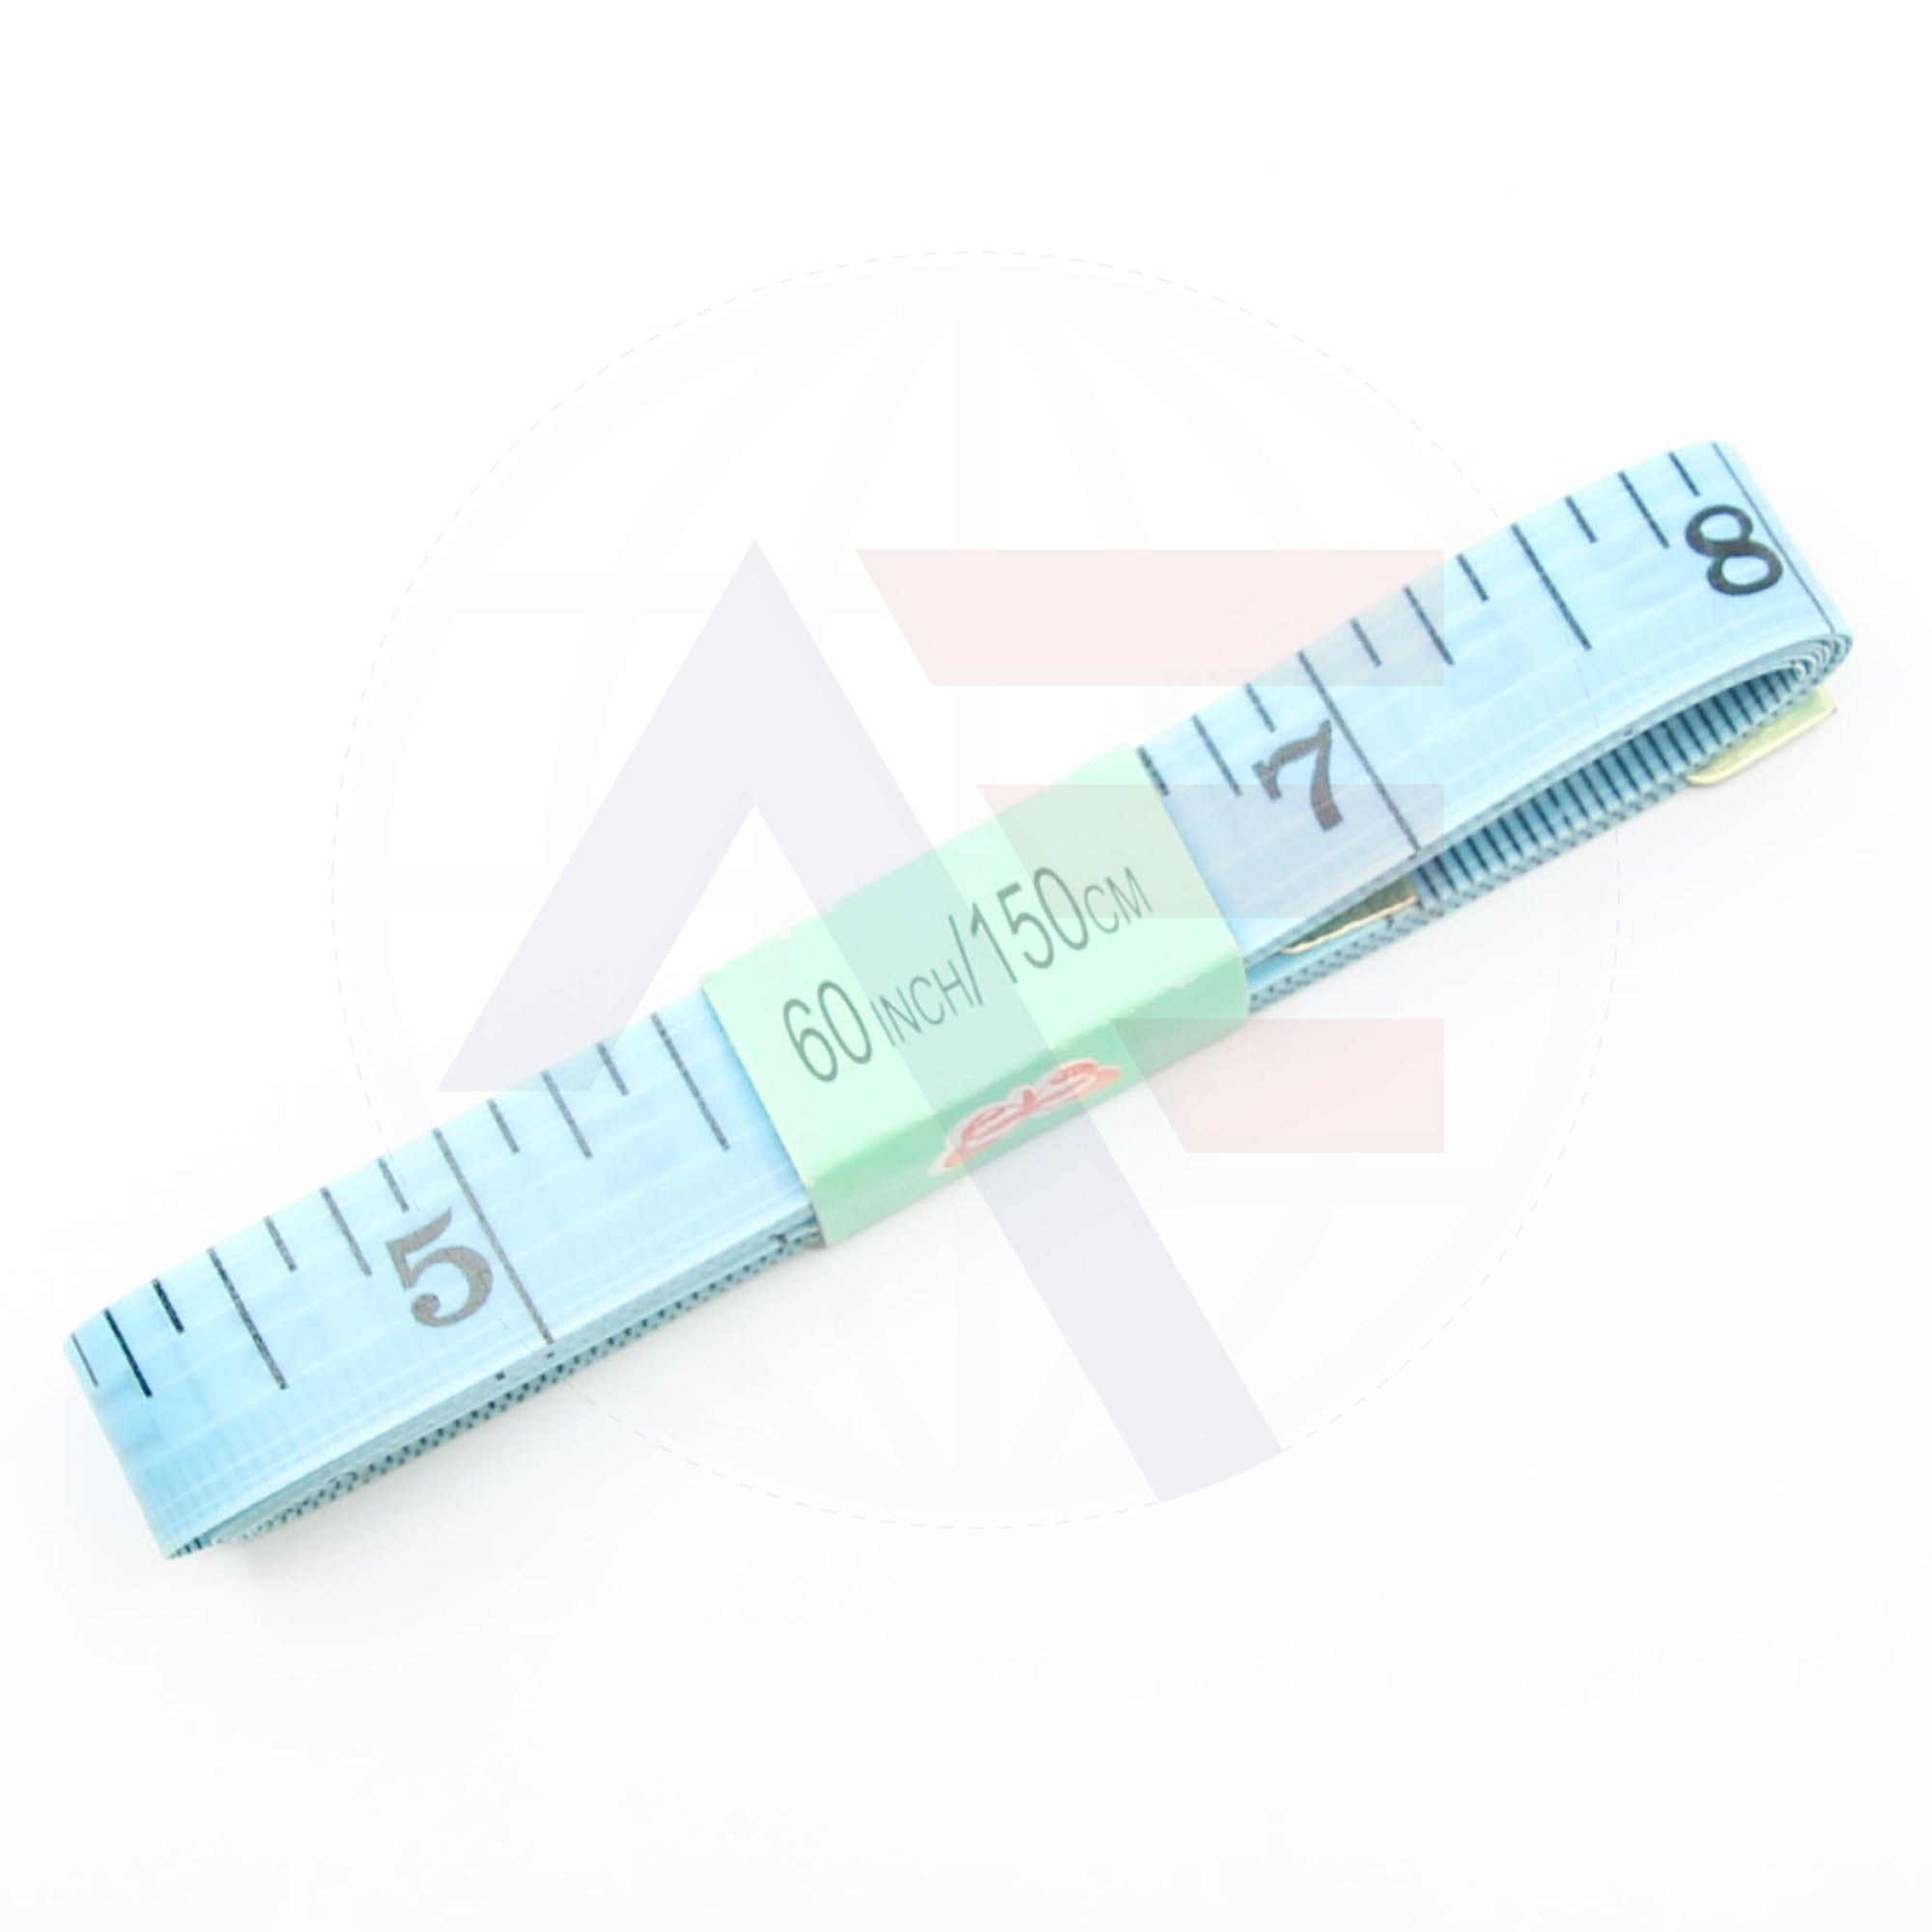 Tm218 Measuring Tape